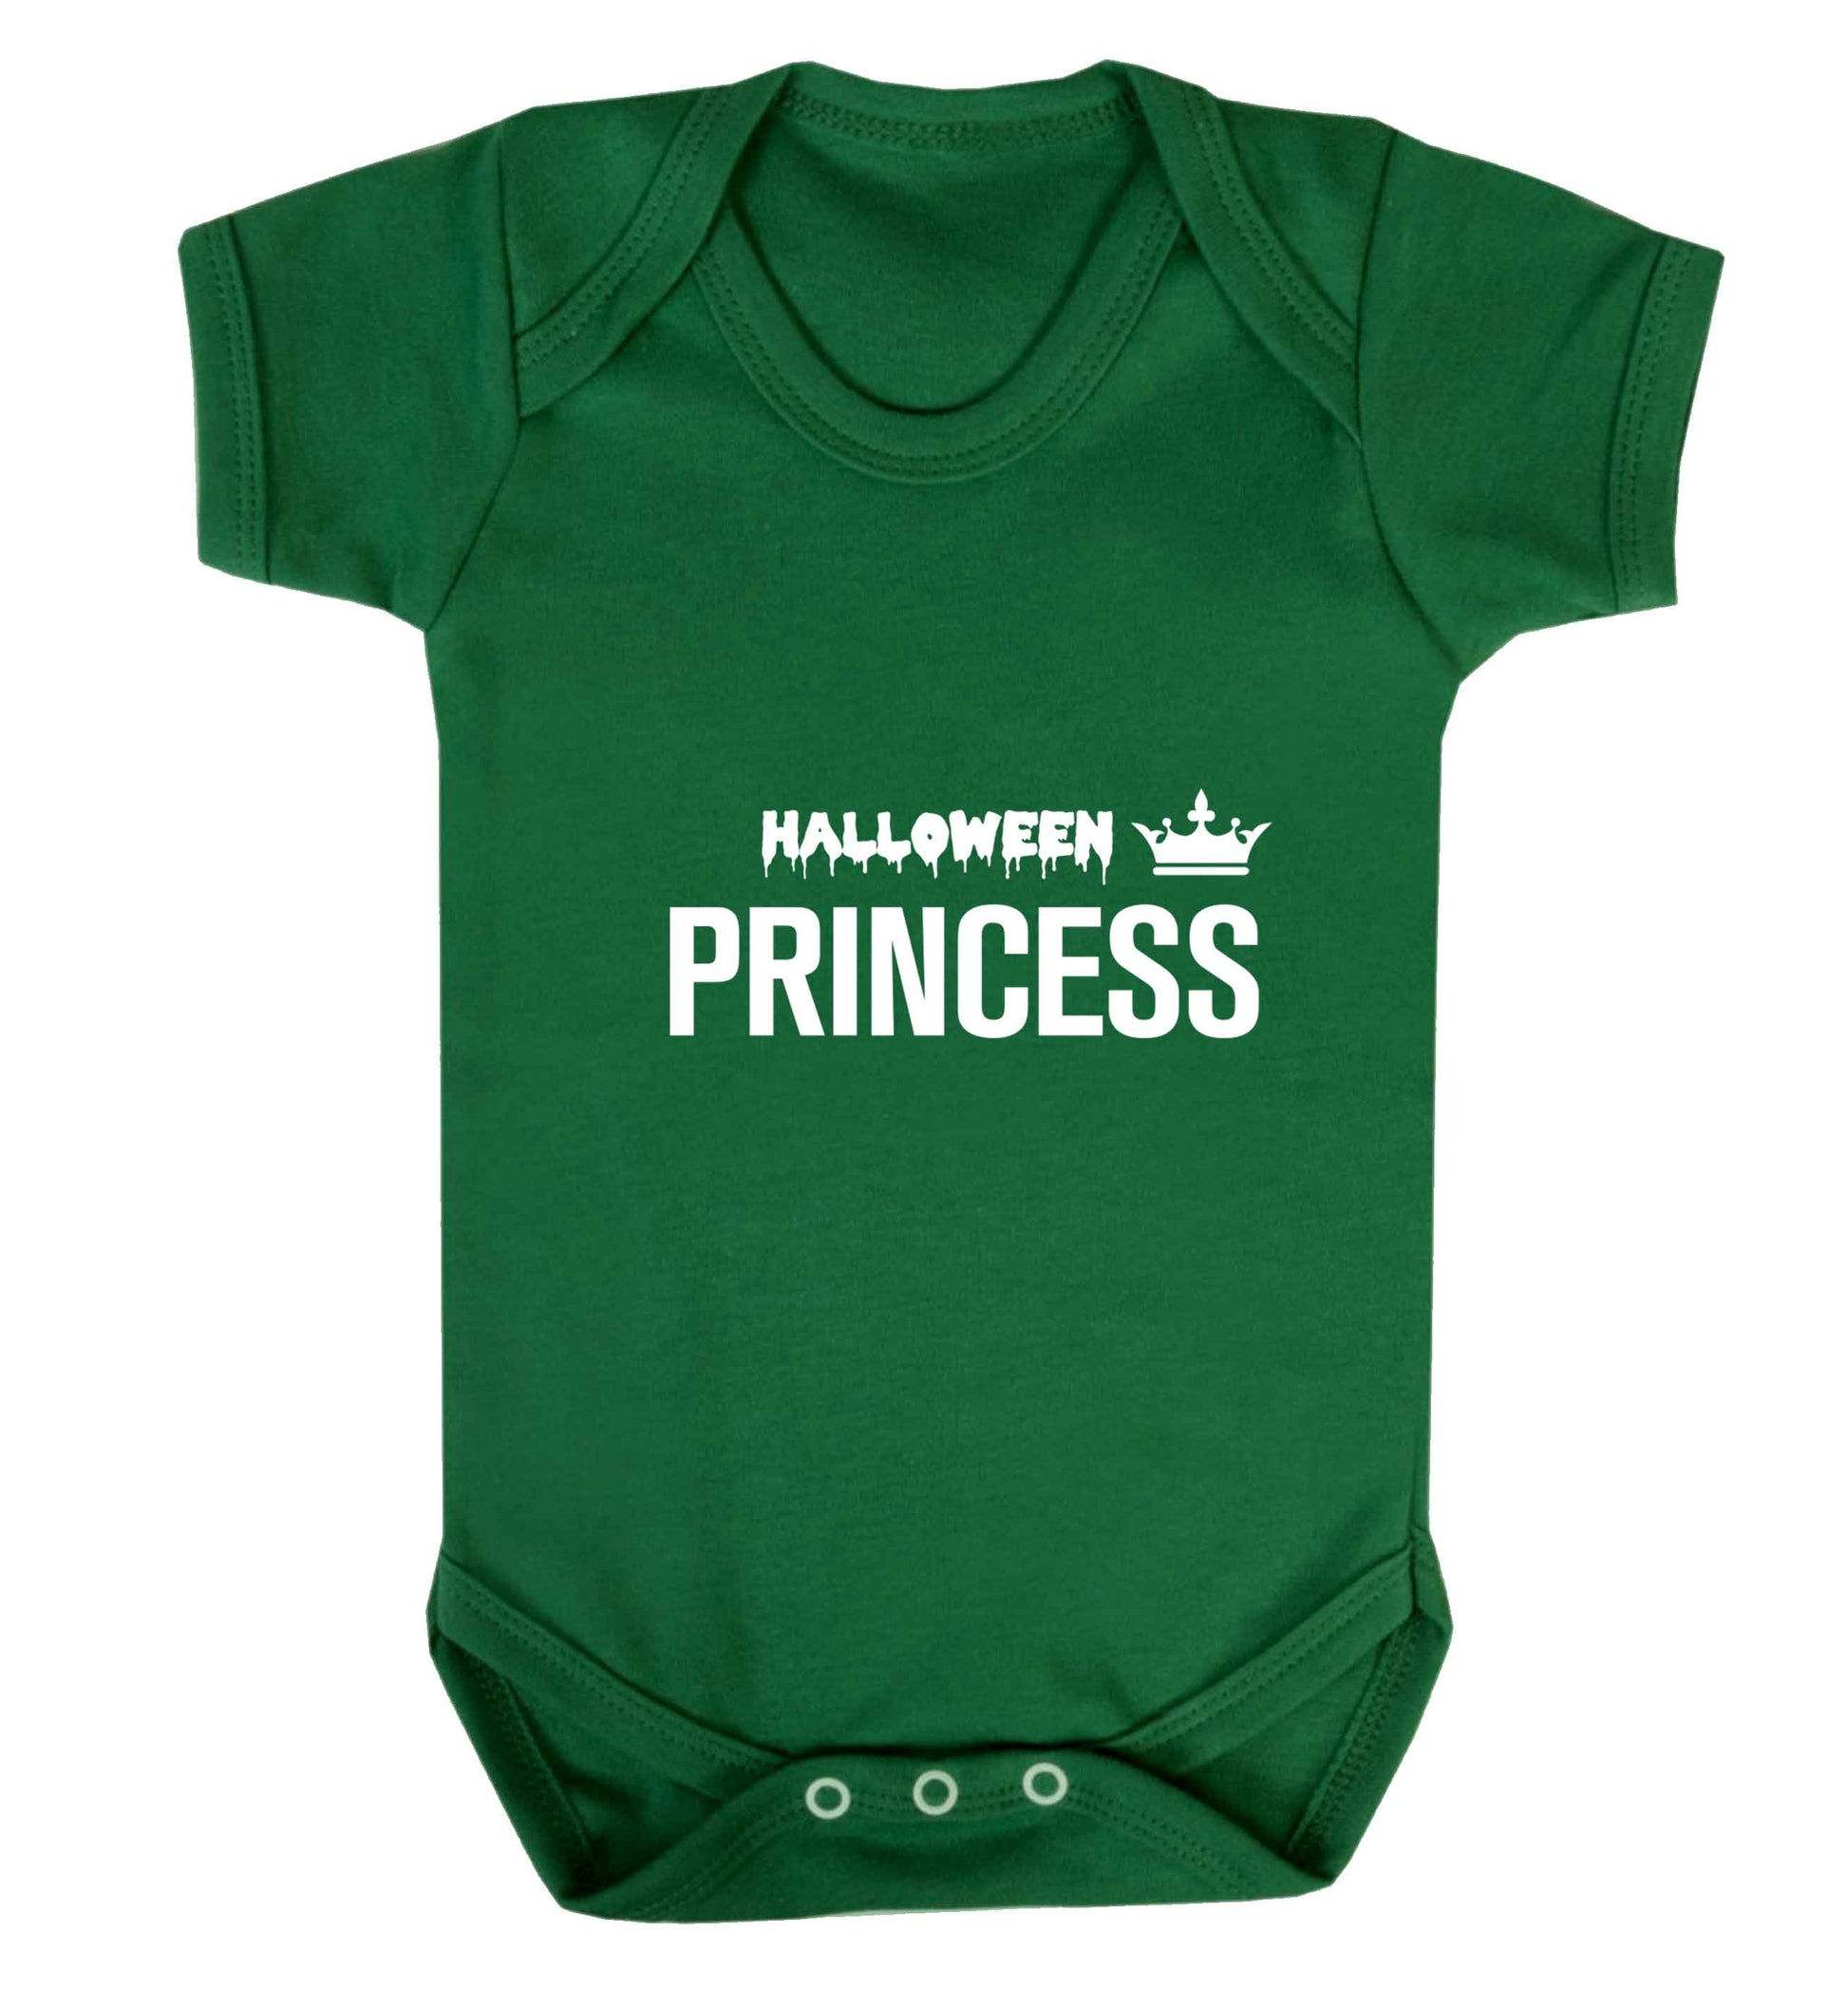 Halloween princess baby vest green 18-24 months